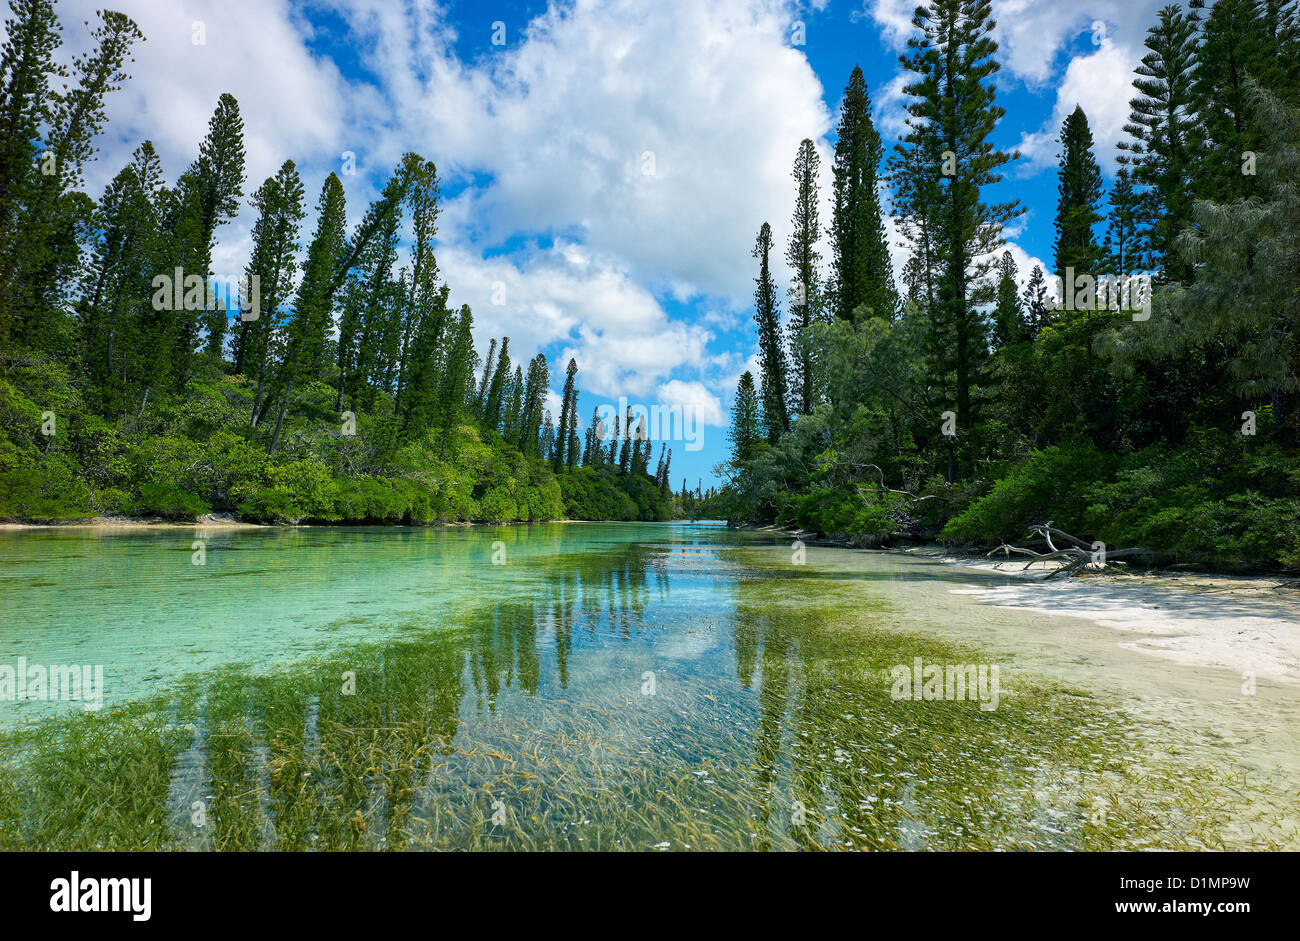 River Isle of Pines New Caledonia Stock Photo